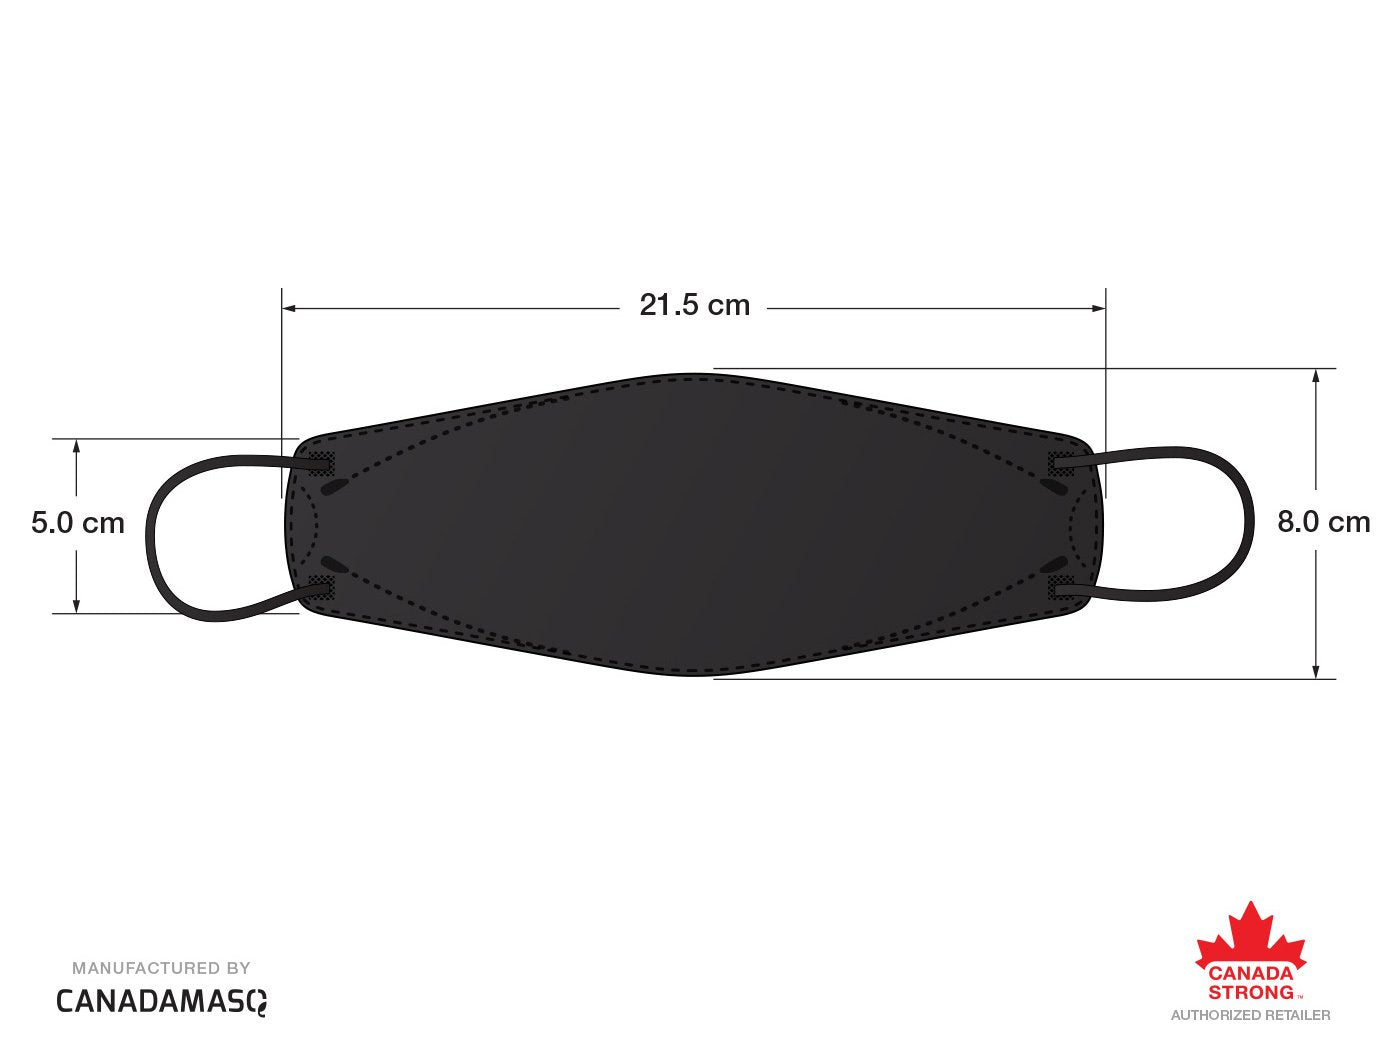 dimensions of canada strong masq CA-N95 black respirator mask